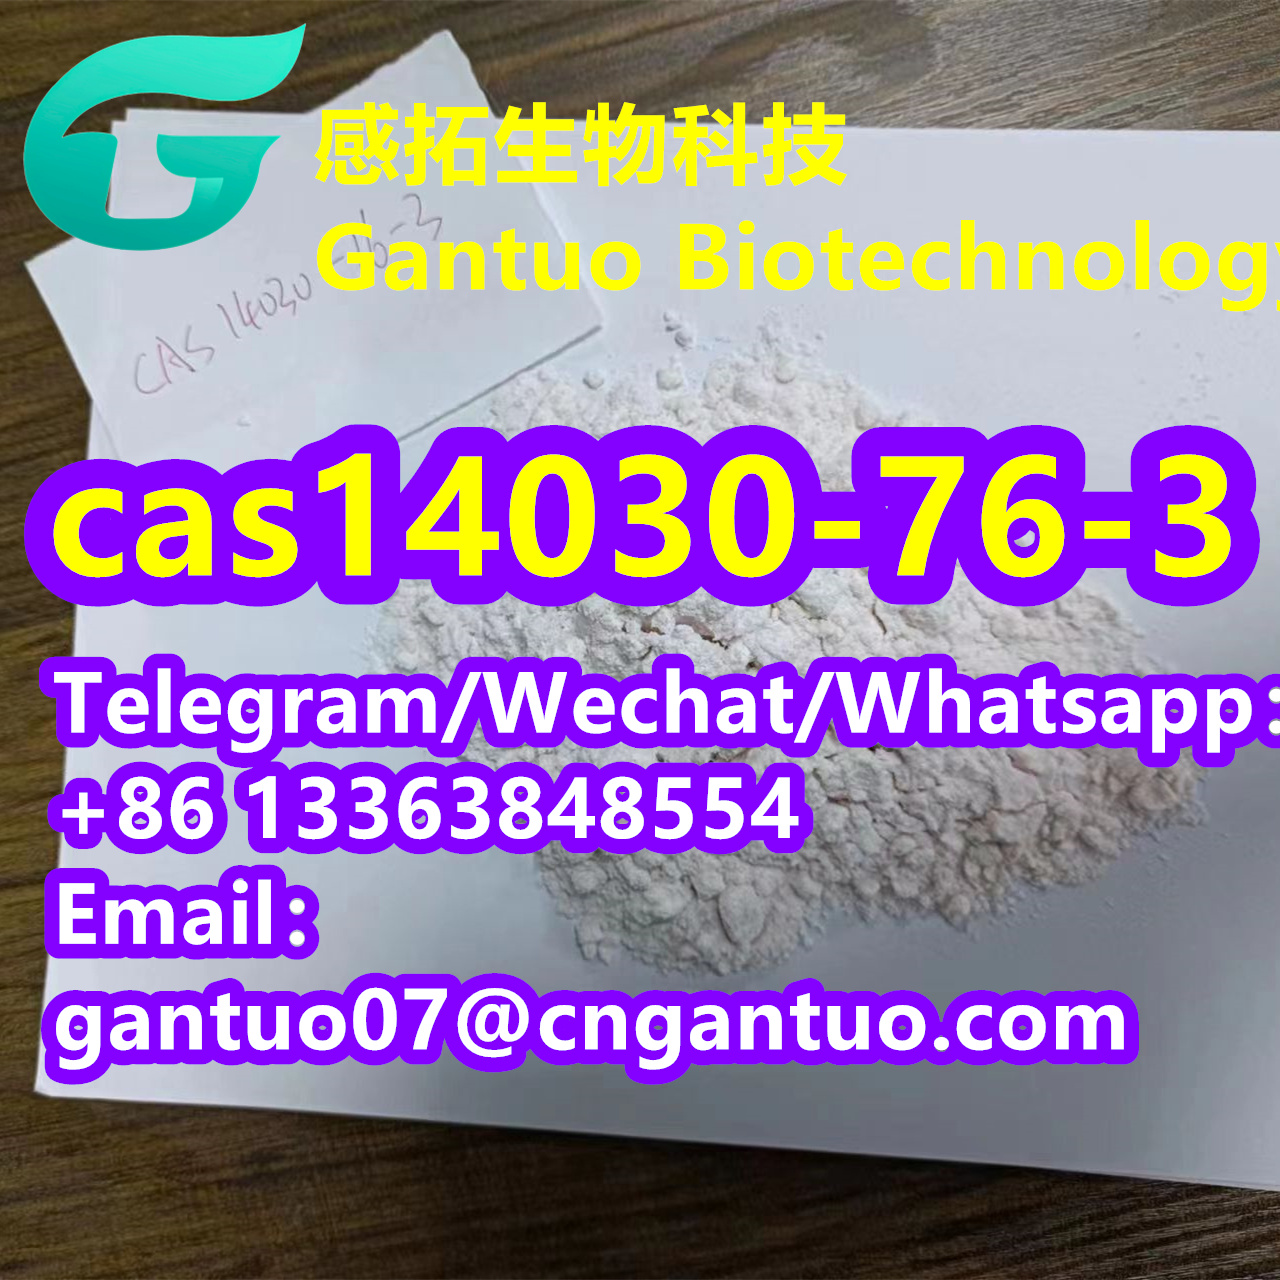 Pharmaceutical Intermediate CAS 288573-56-8 Tert-Butyl 4- (4-fluoroanilino)